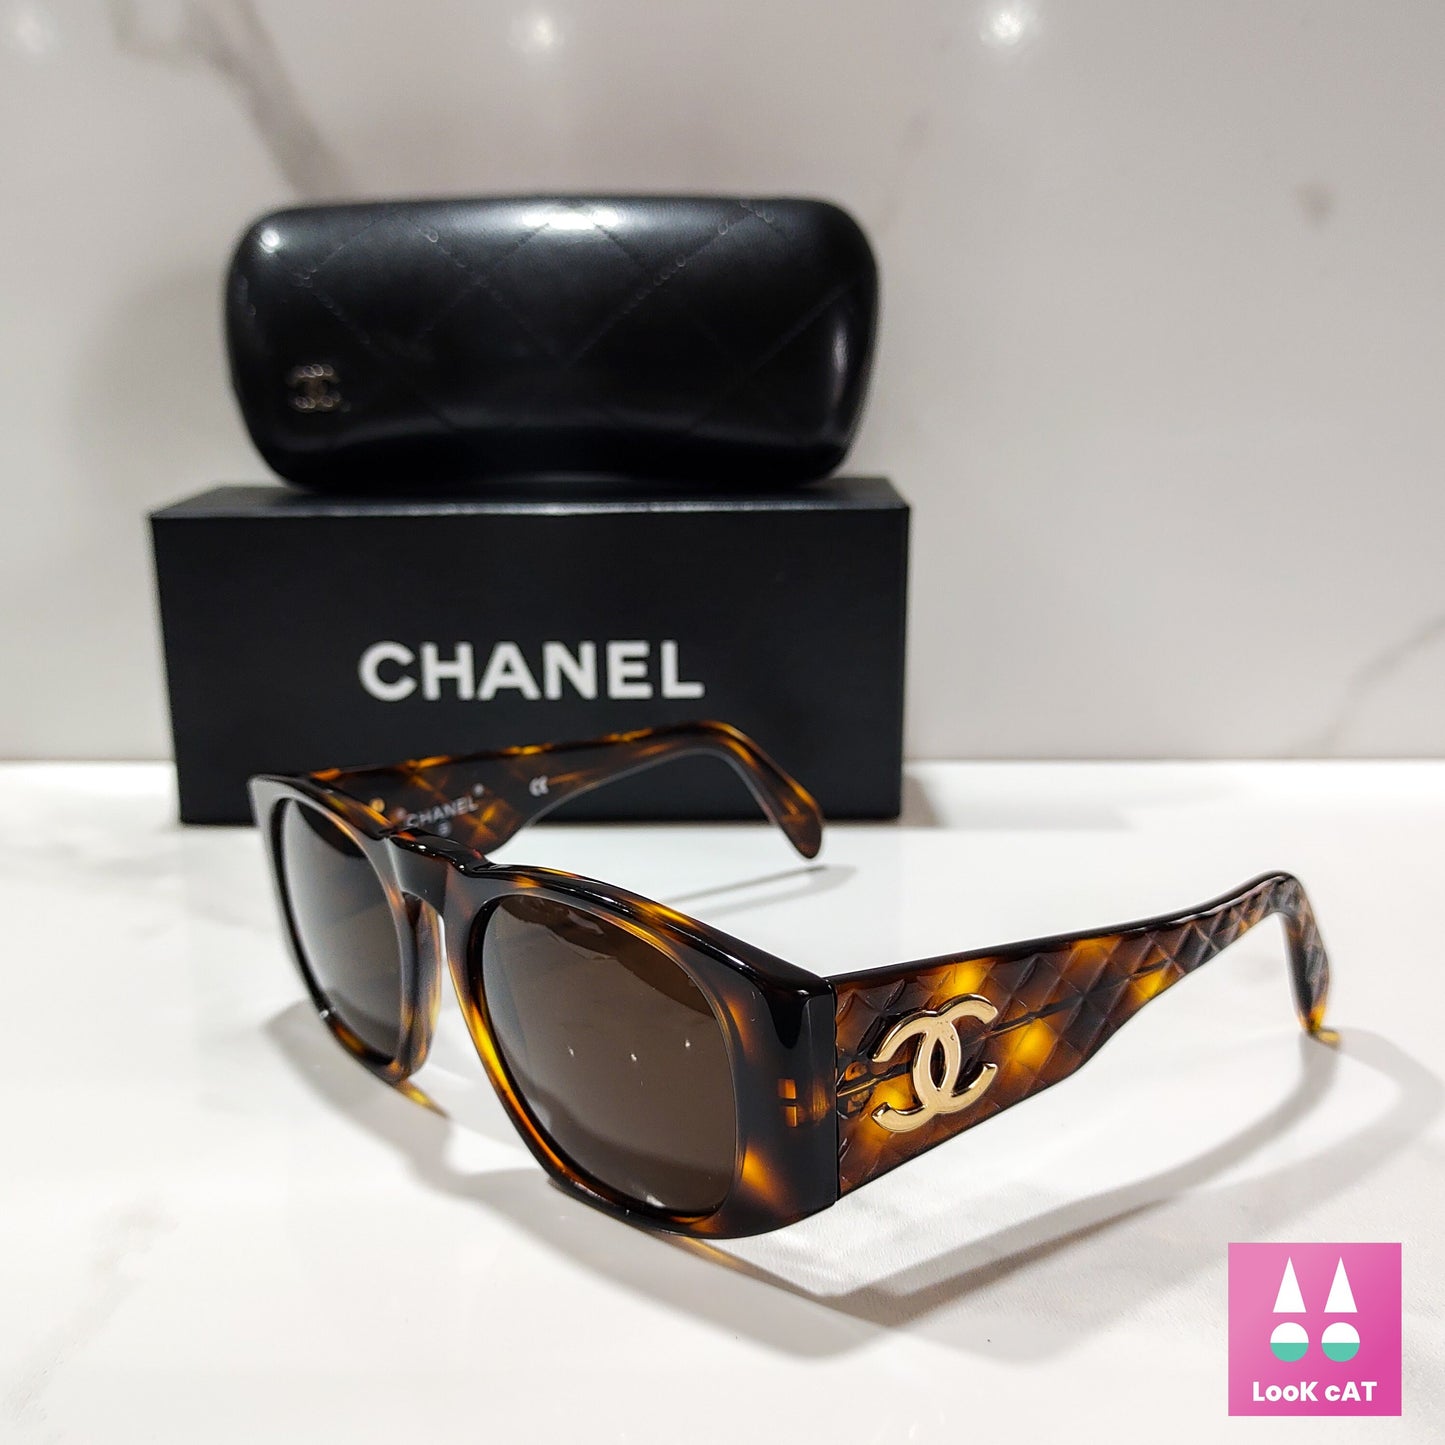 Chanel 型号 01450 brille 边框太阳镜 90 年代色调